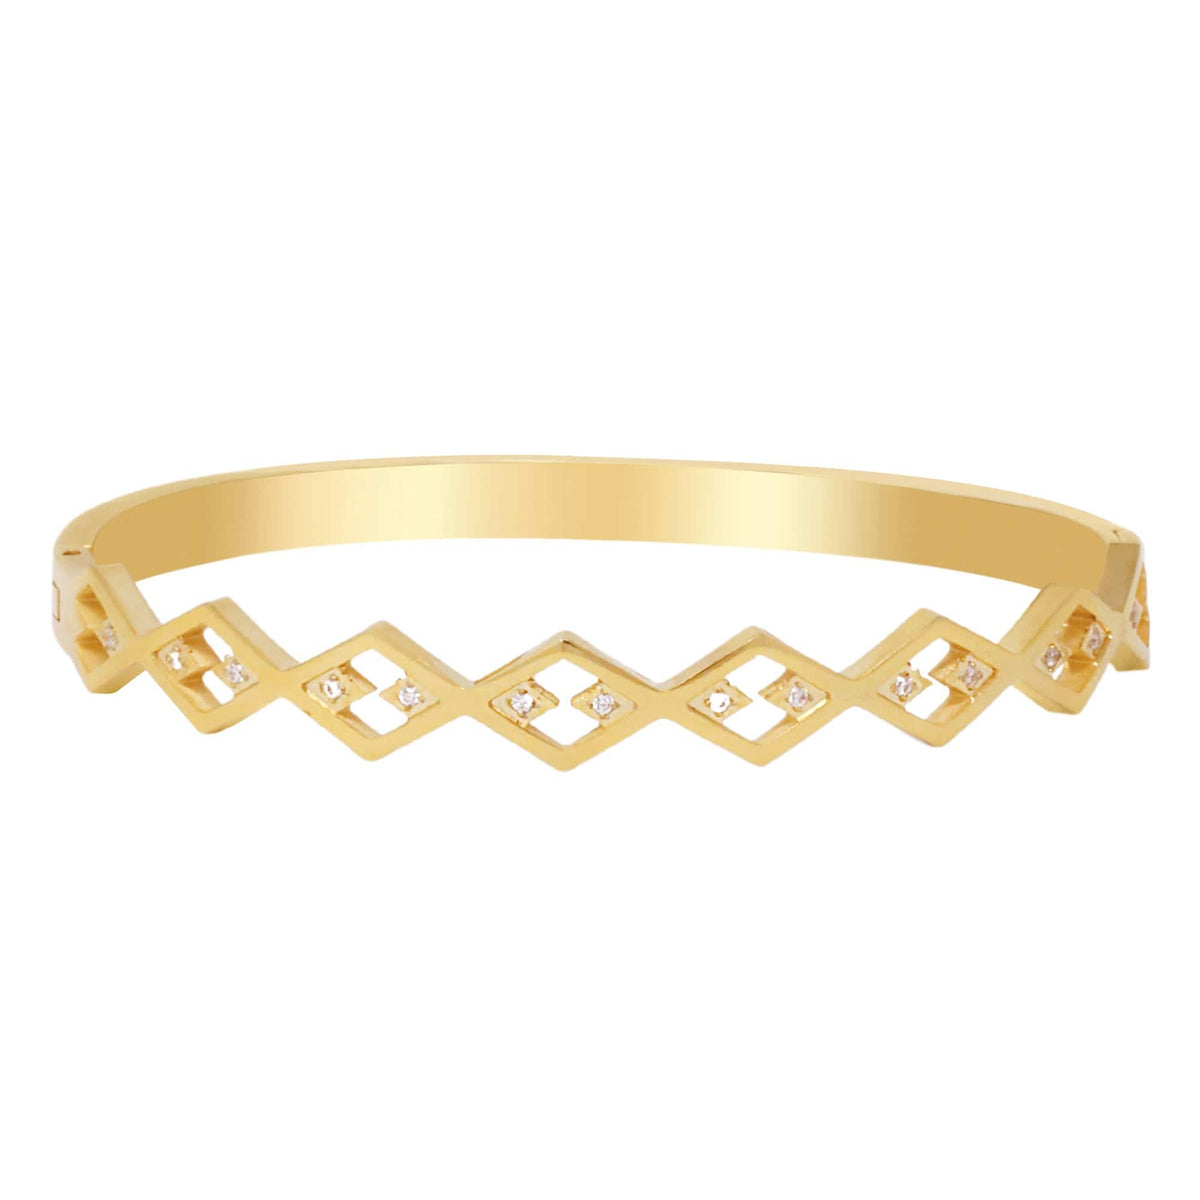 BohoMoon Stainless Steel Empire Bracelet Gold